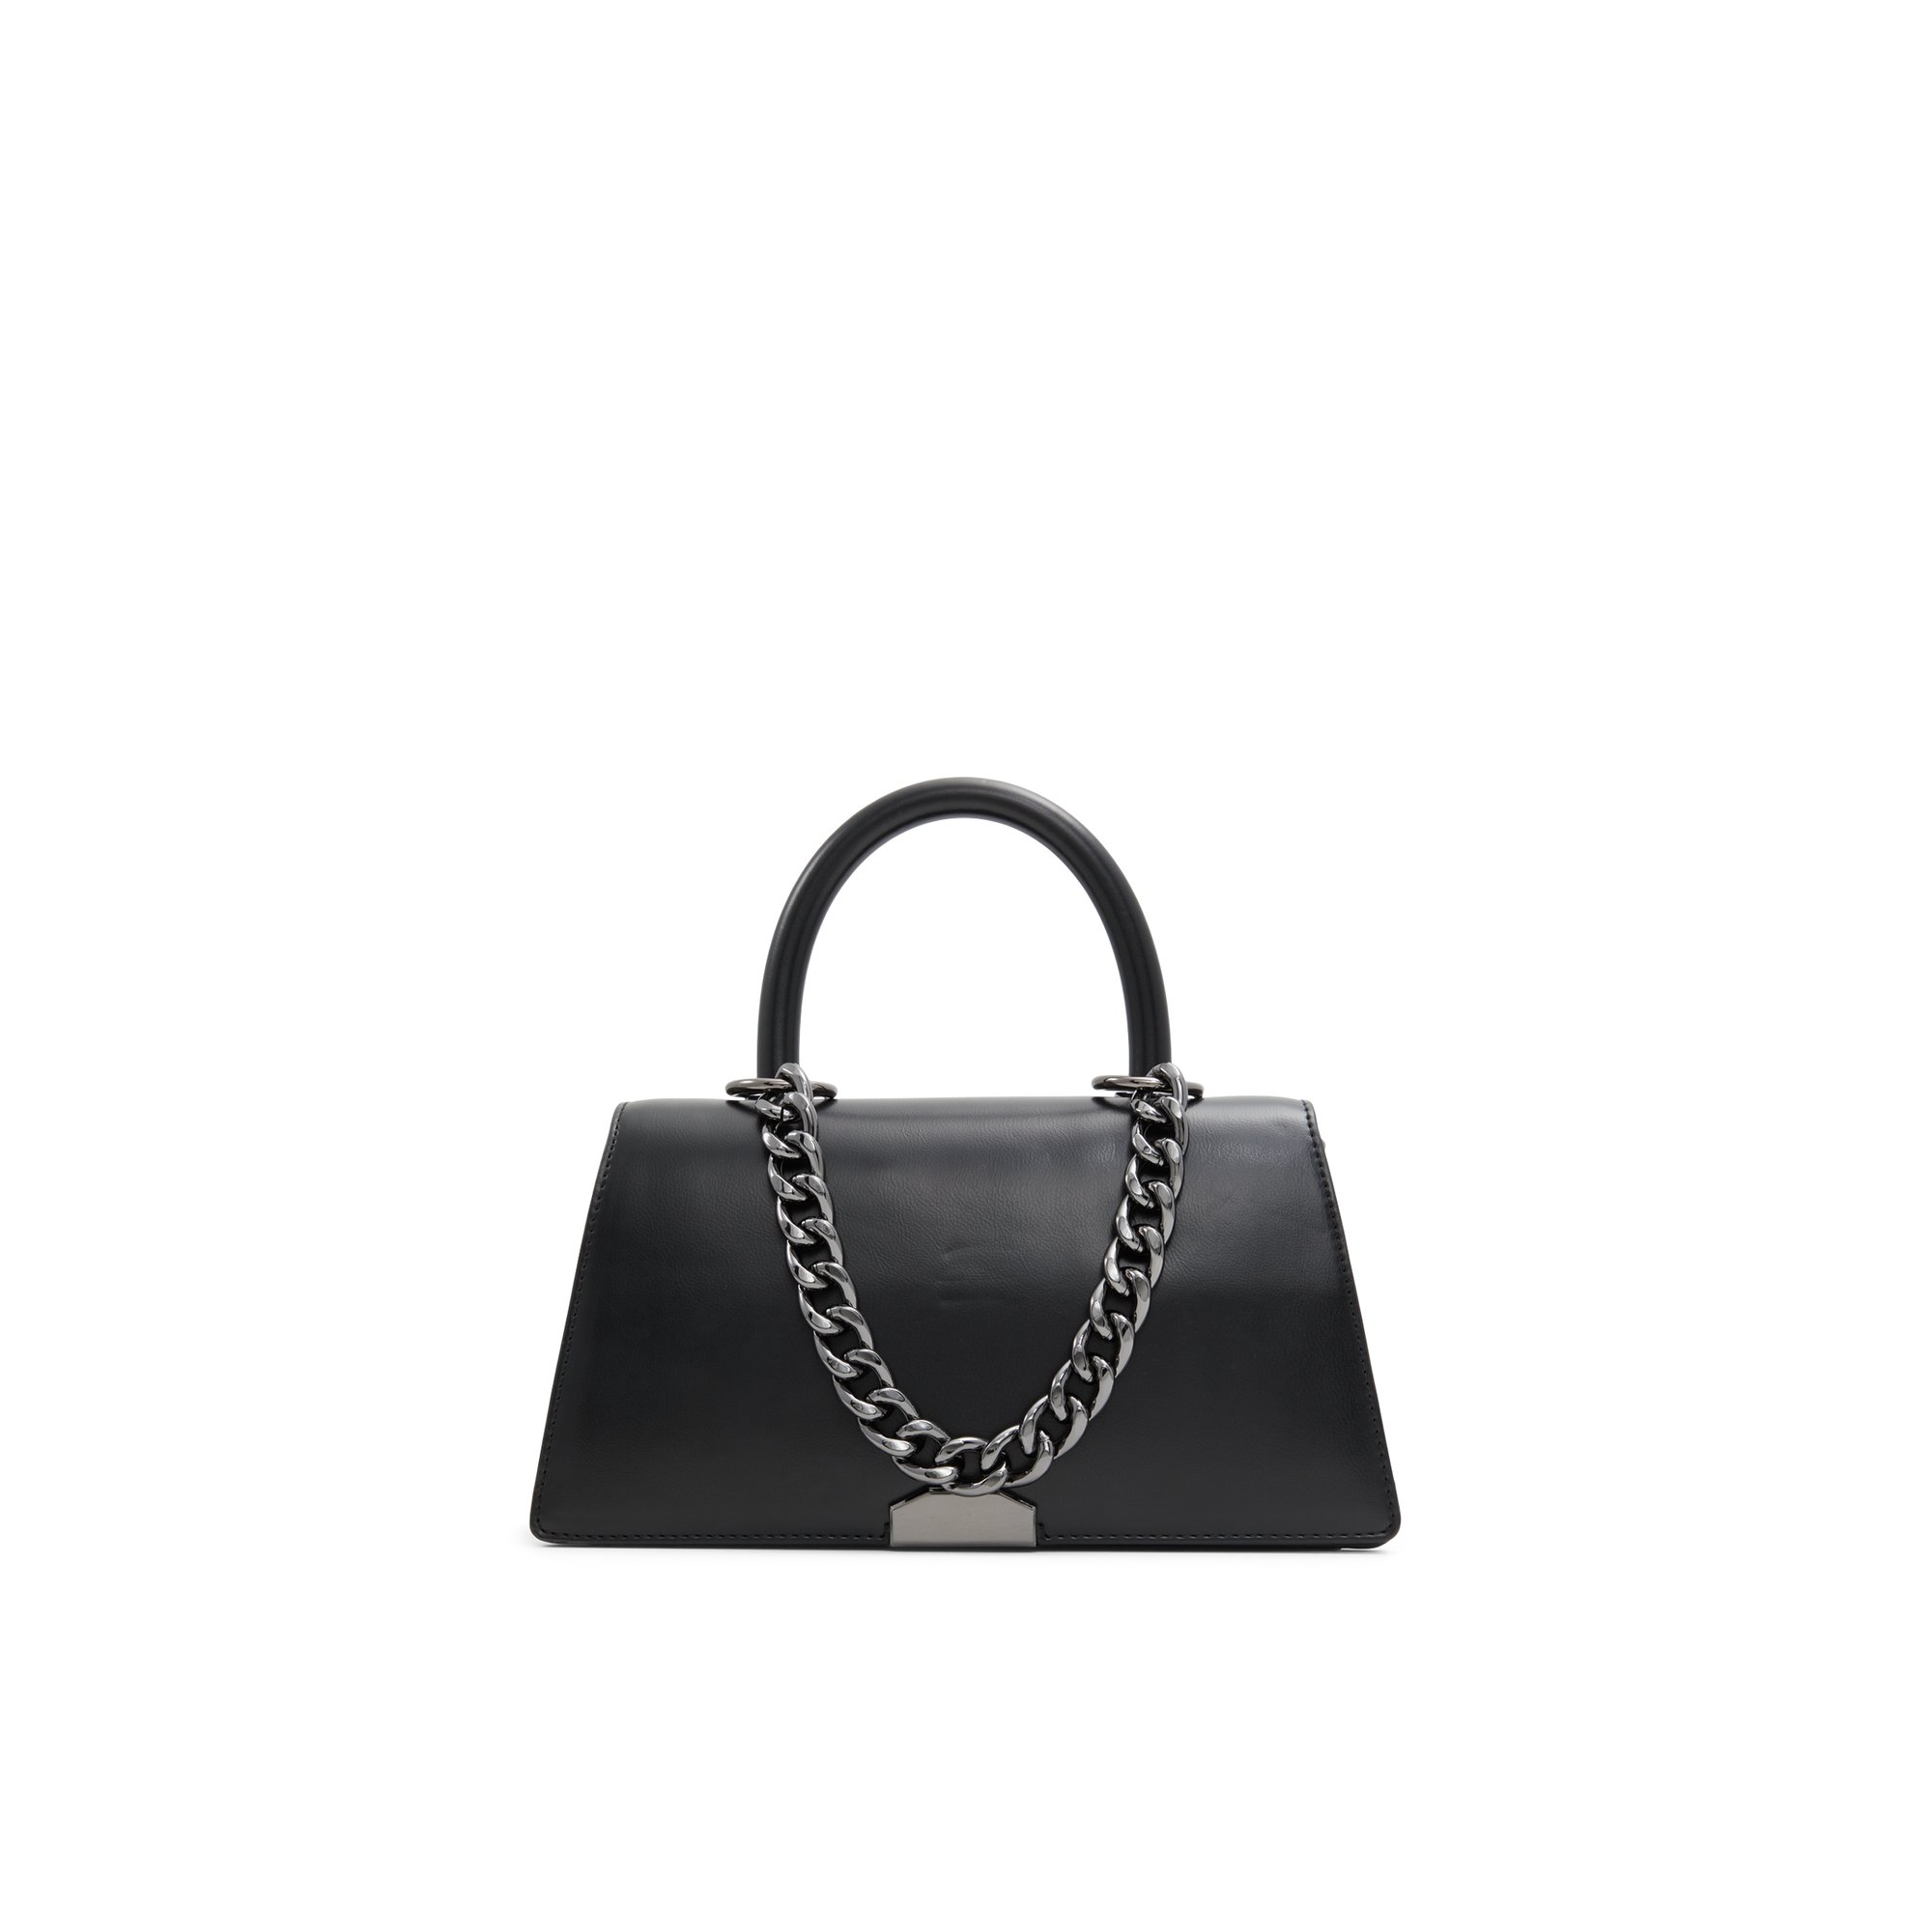 ALDO Avedax - Women's Top Handle Handbag - Black